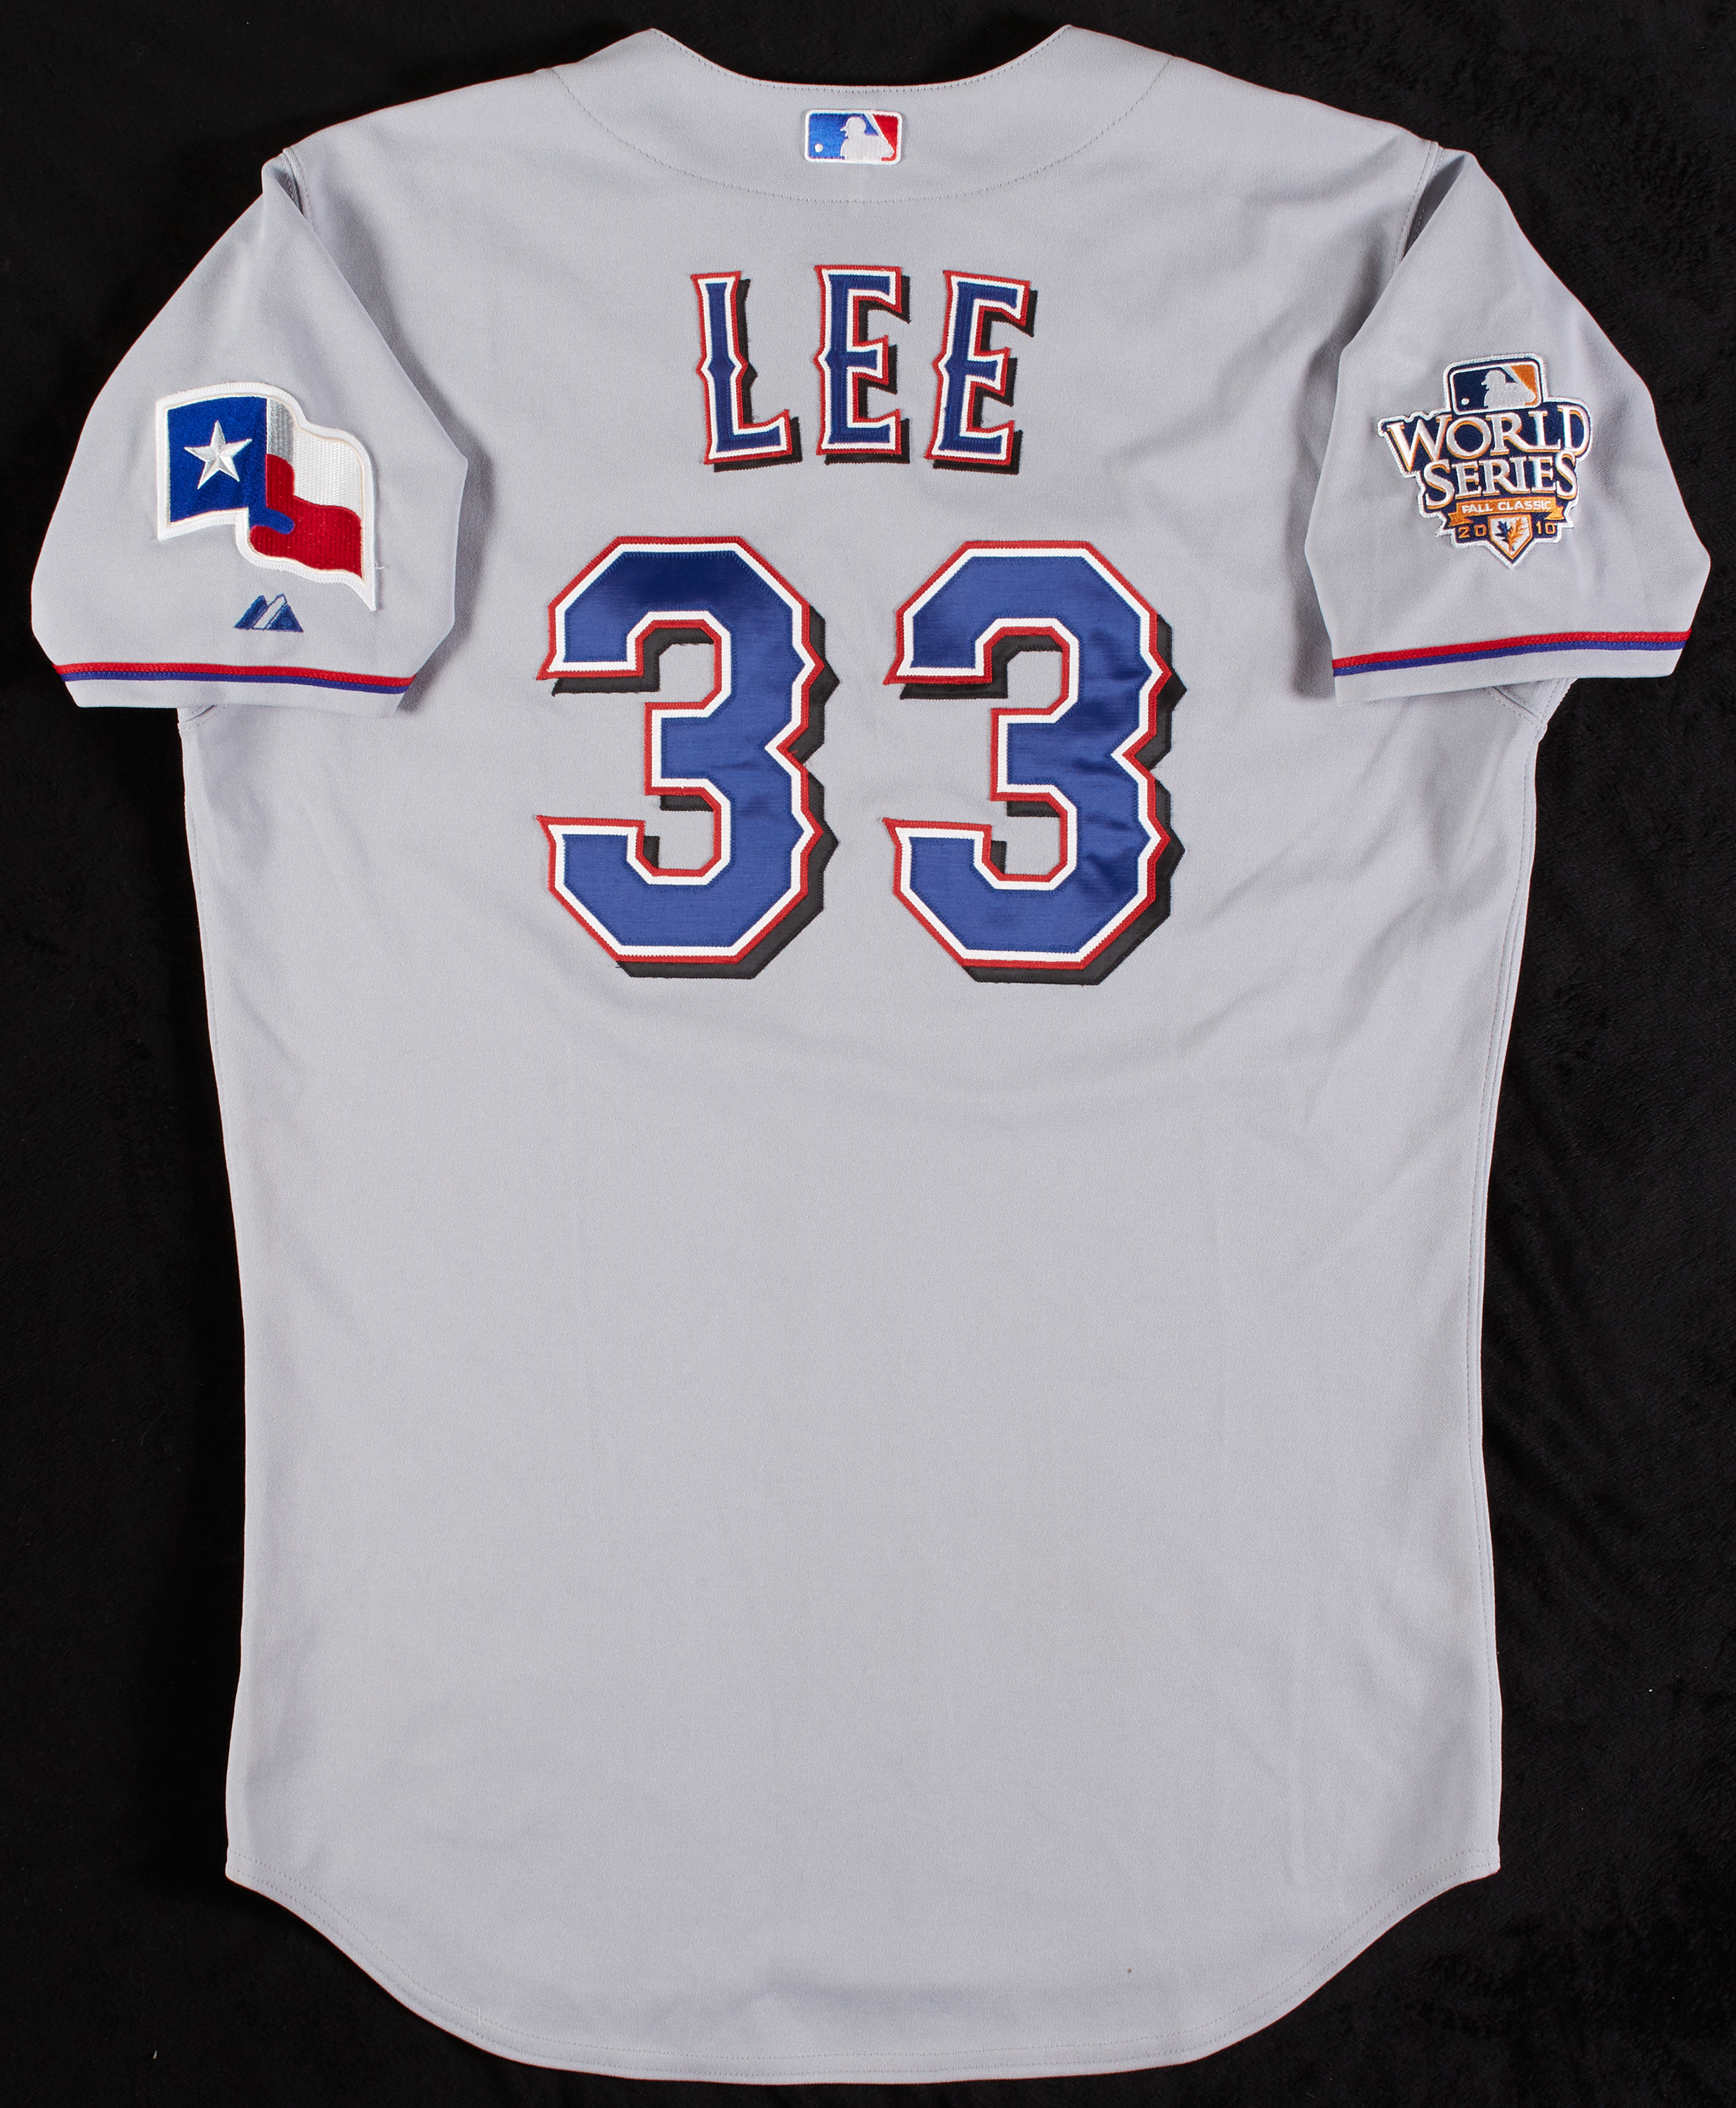 Cliff Lee MLB Jerseys for sale